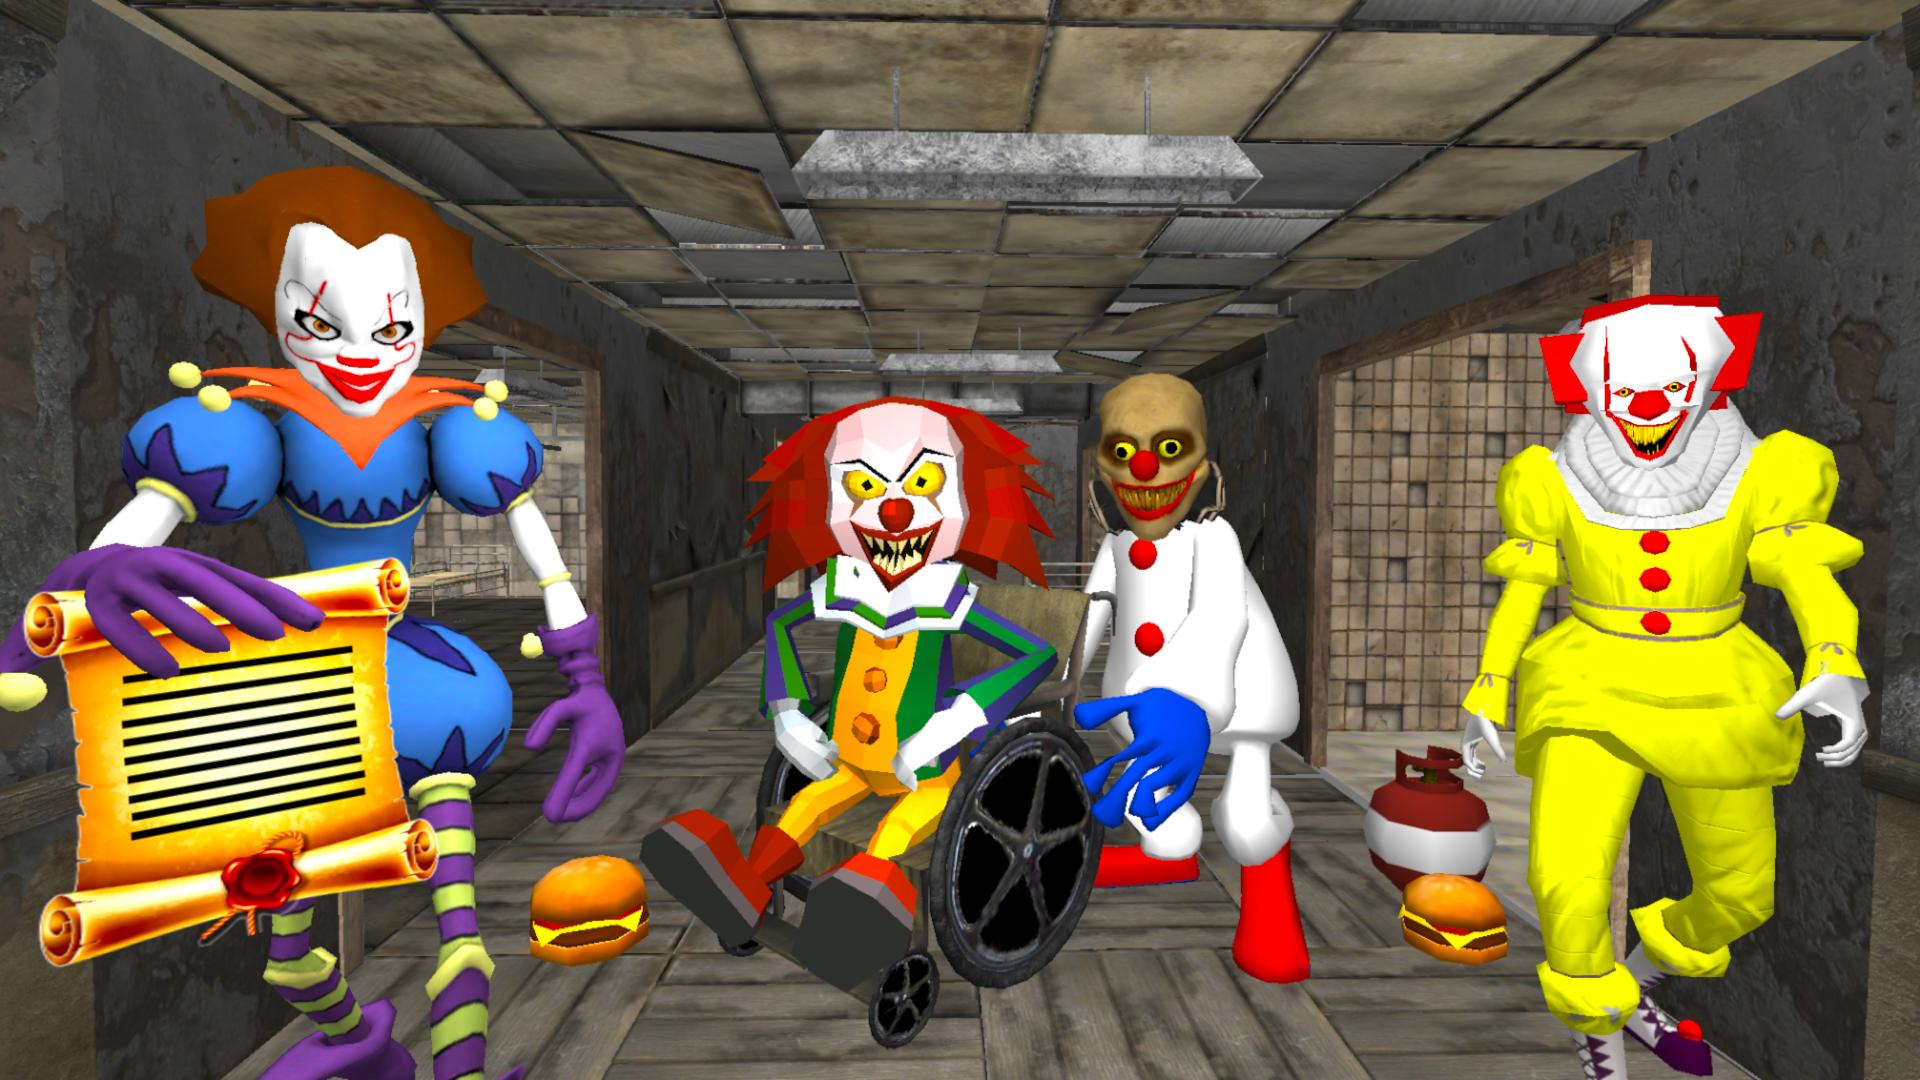 Побег от клоунов. Клоун госпиталь нейбор Эскейп 3 д. Клоун сосед Эскейп. Сосед клоун нейбор. Clown Hospital Neighbor Escape 3d клоун.